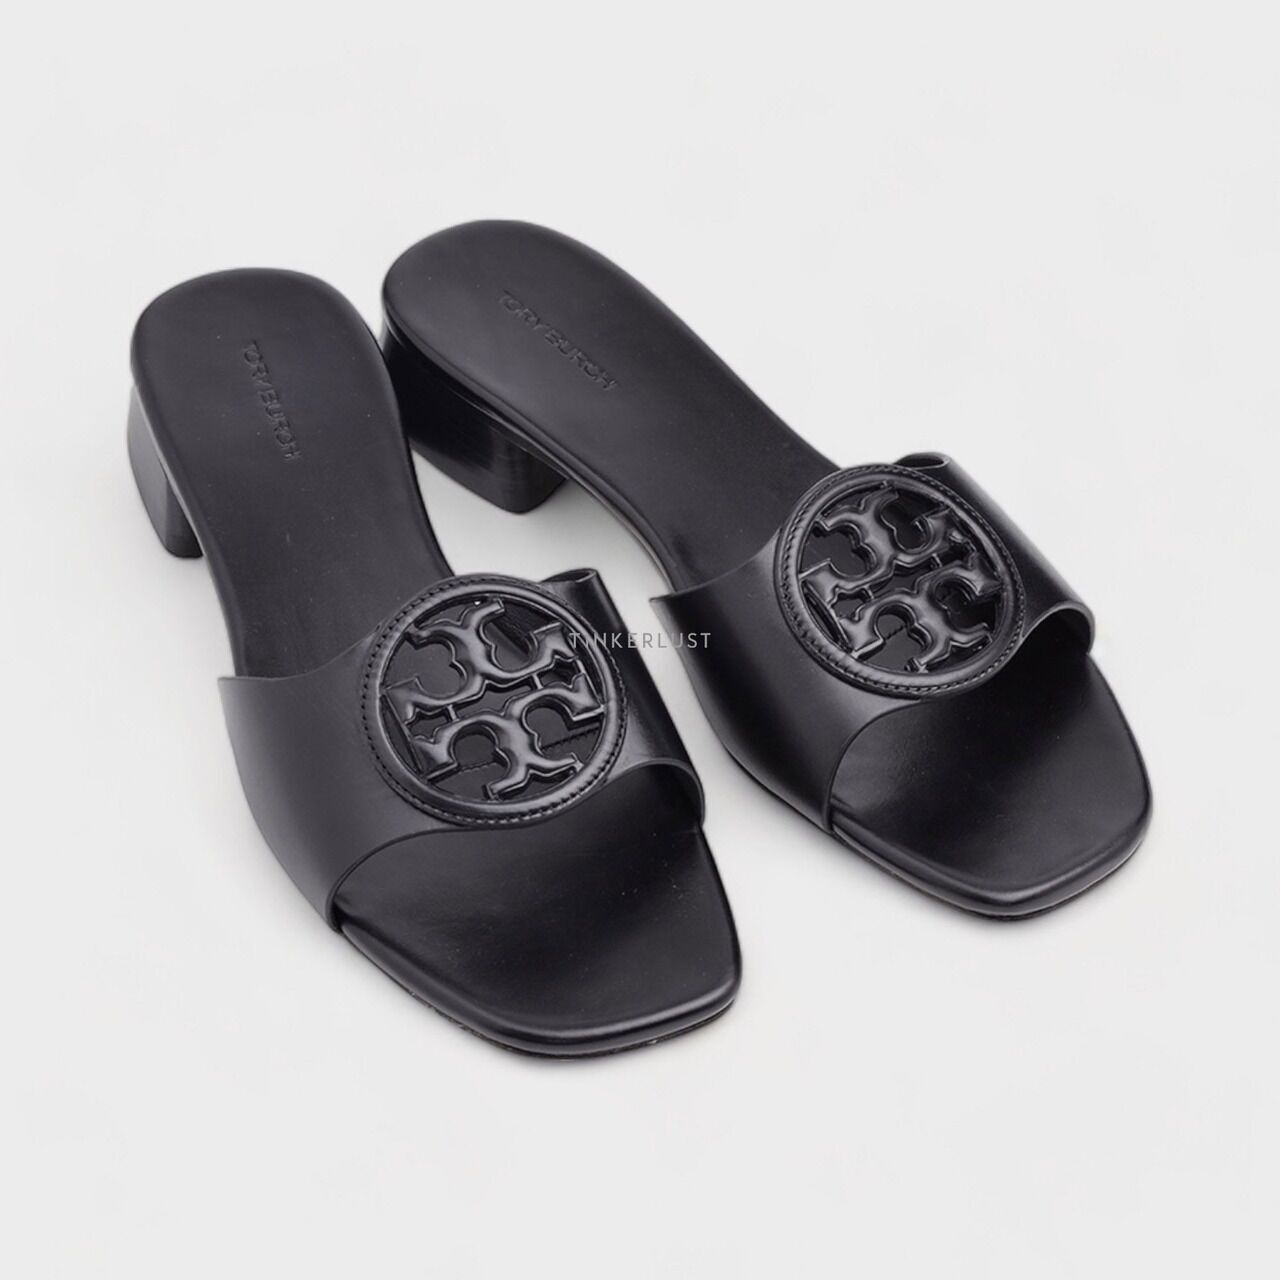 Tory Burch Bombe Bombe Miller Slides Perfect Black Sandals